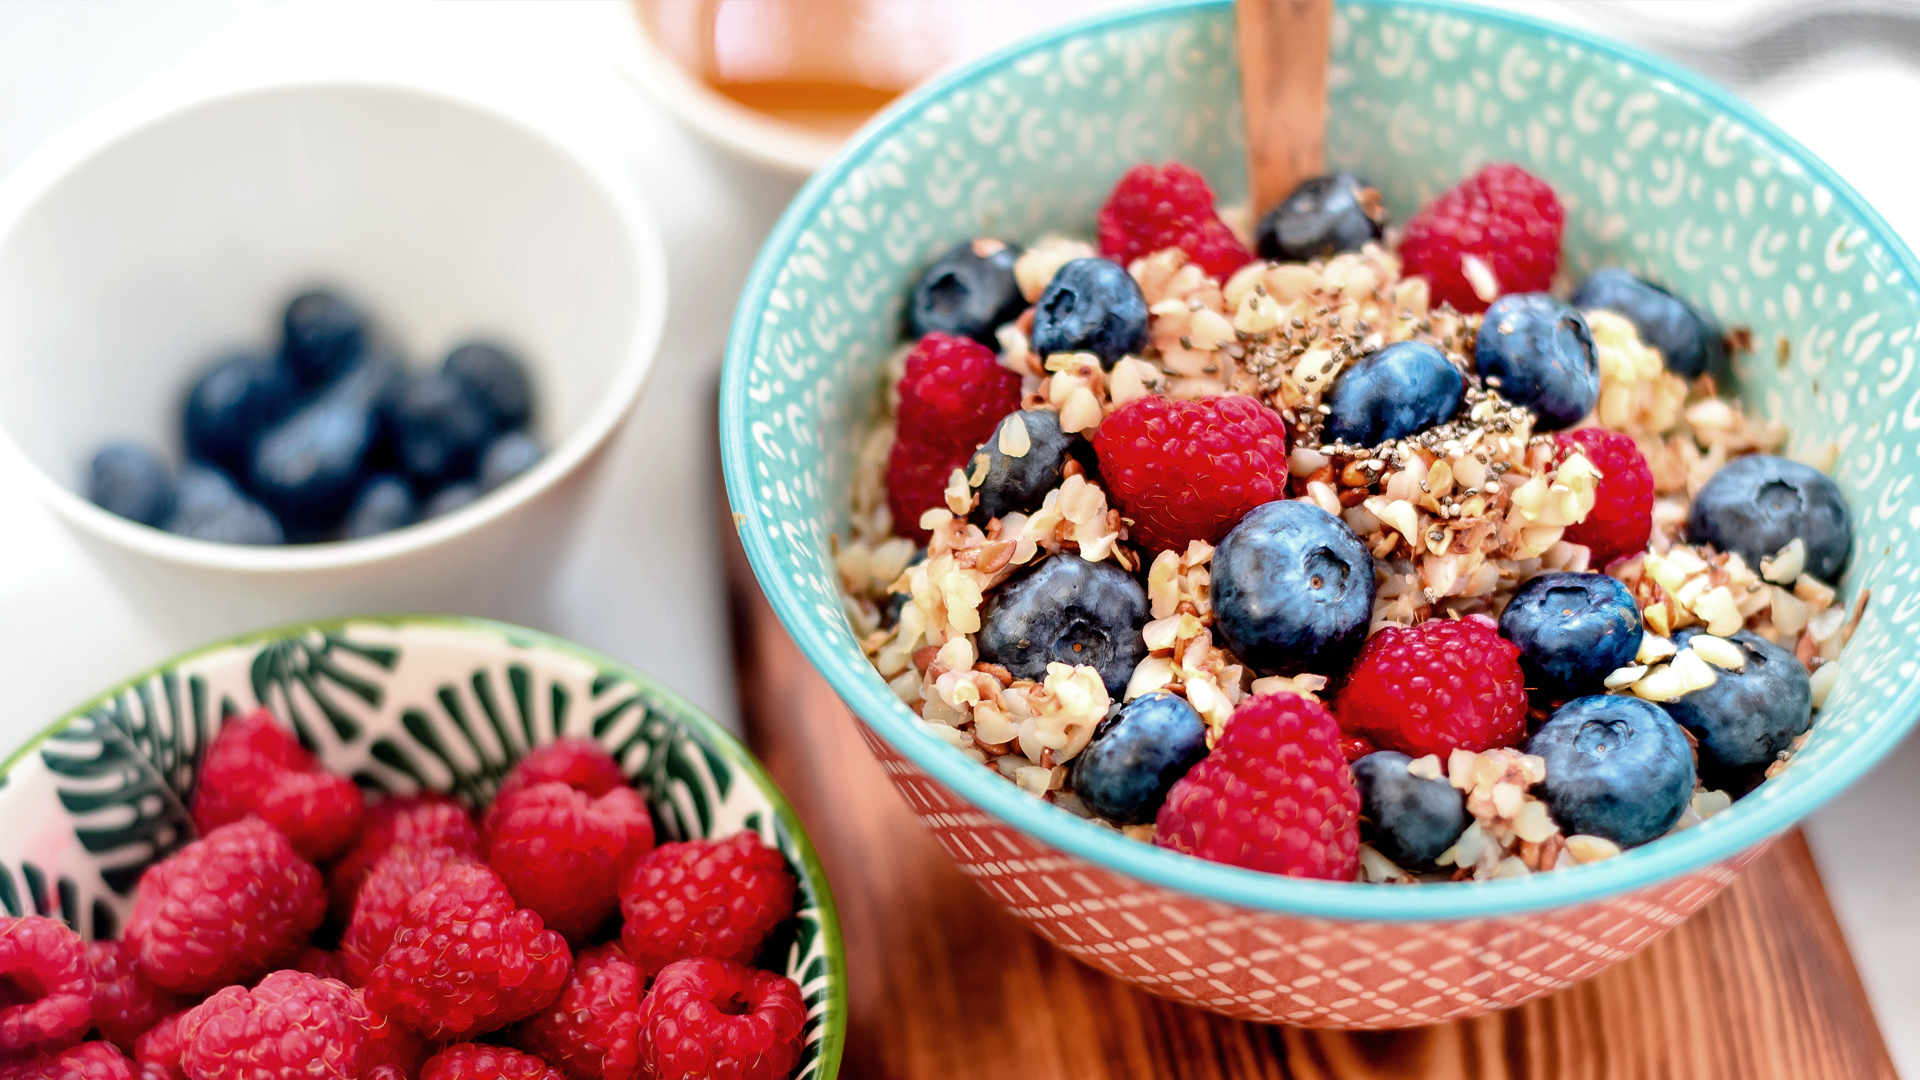 An antioxidant-rich, gluten-free breakfast: buckwheat porridge with fresh berries